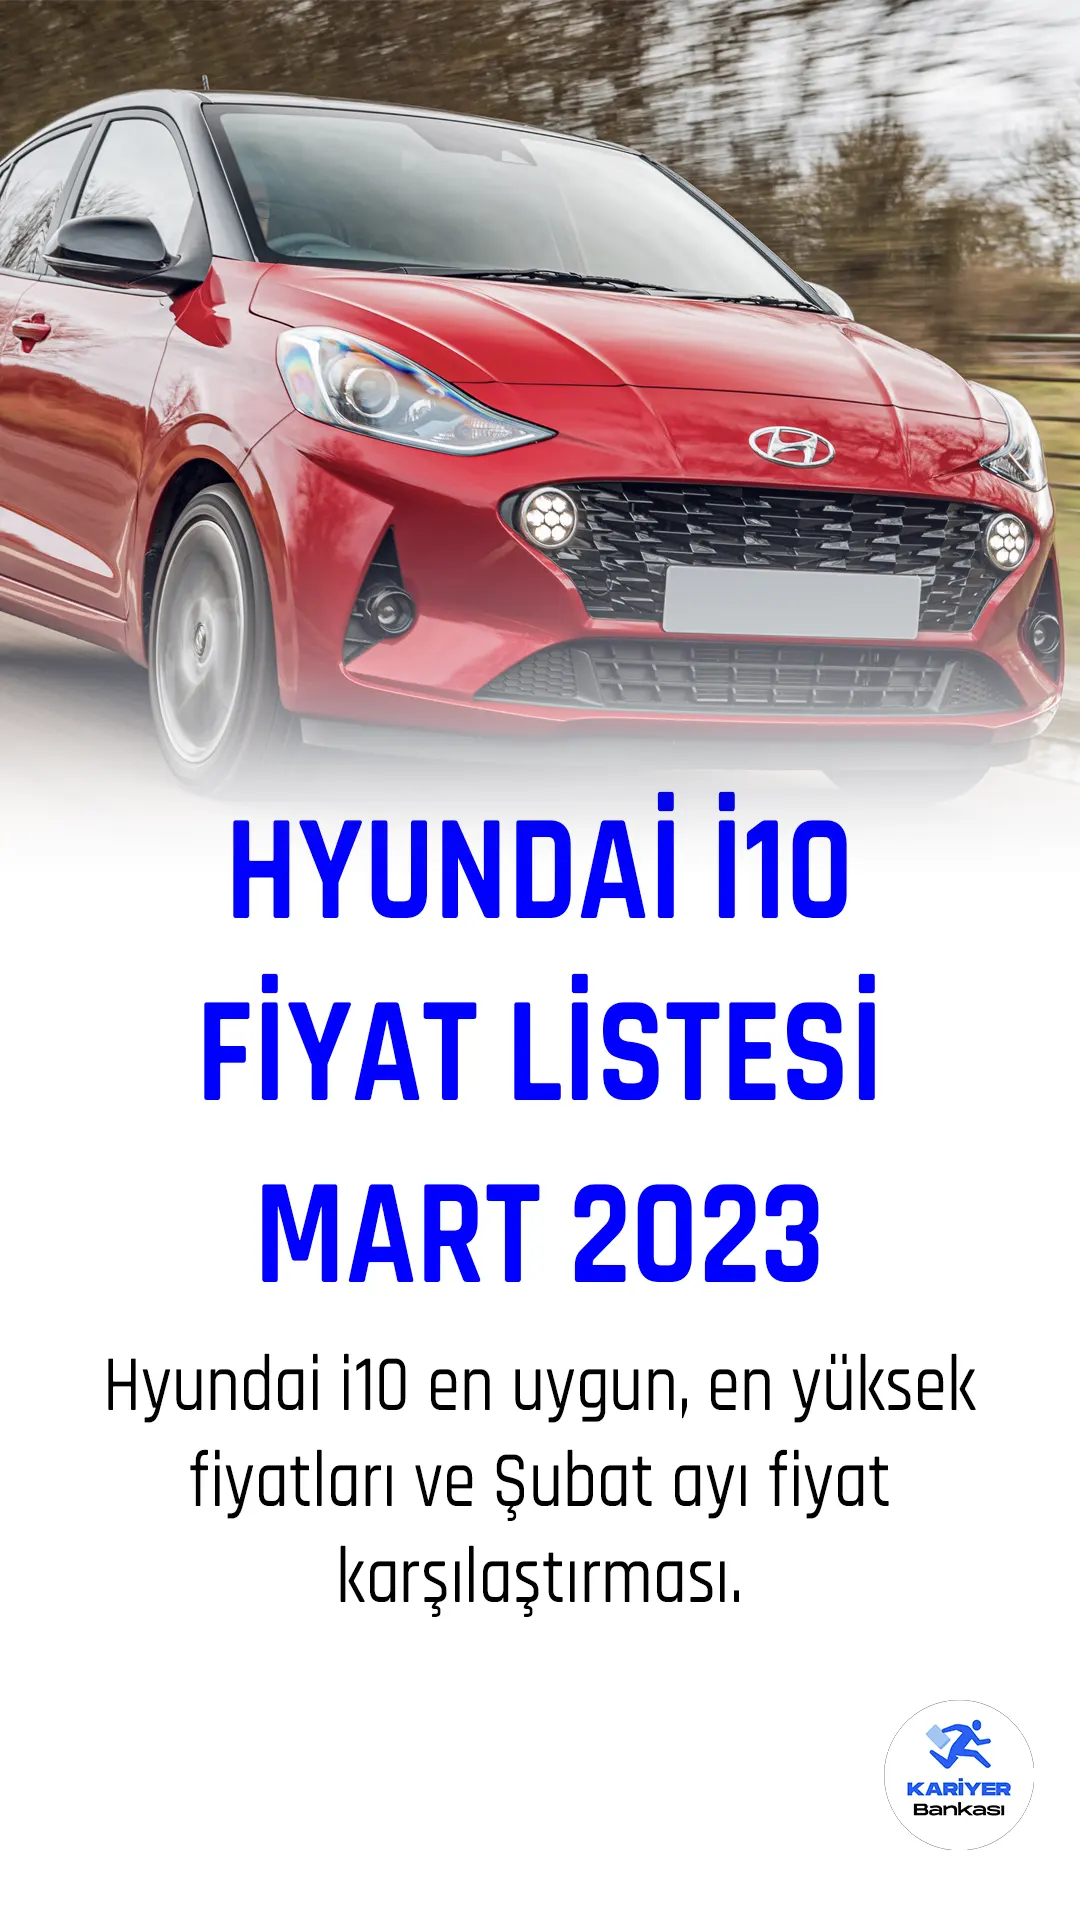 Hyundai i10 mart fiyat listesi yayımlandı.